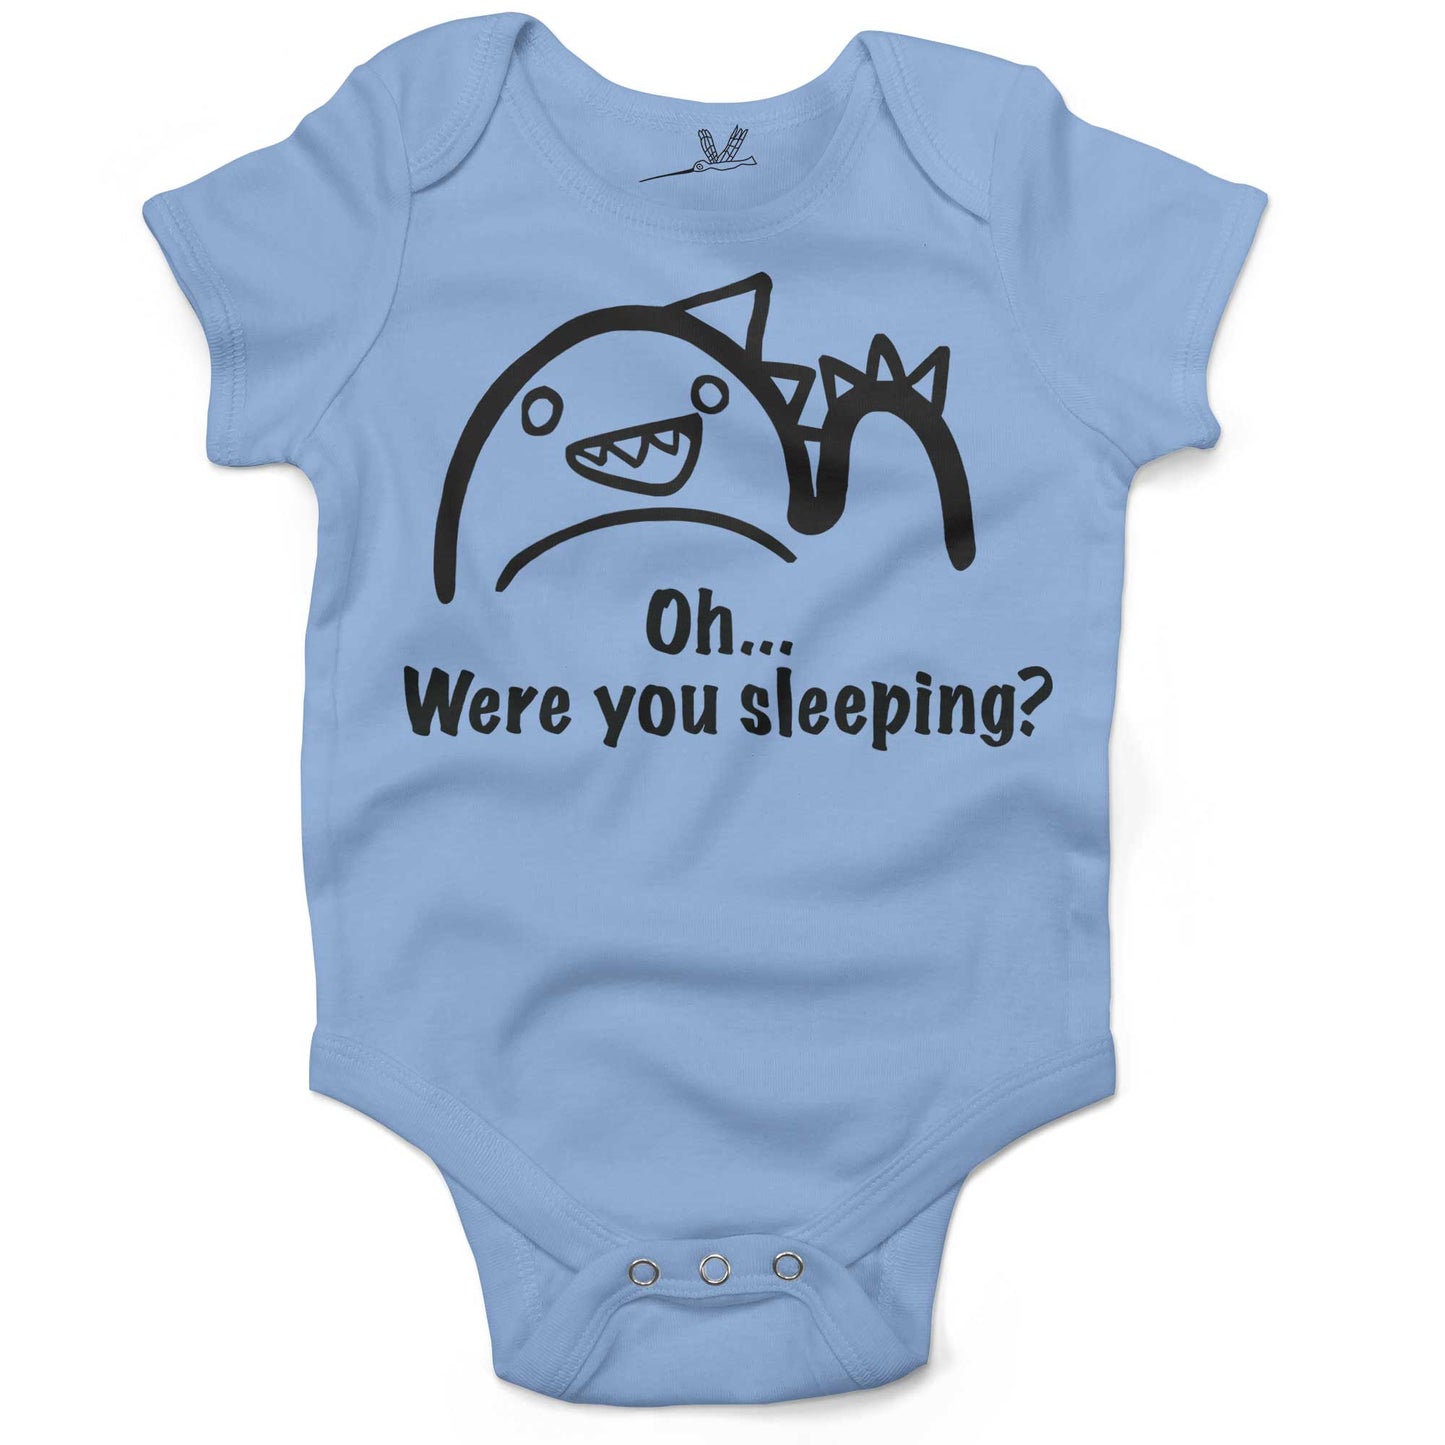 Oh...Were you sleeping? Infant Bodysuit or Raglan Baby Tee-Organic Baby Blue-3-6 months